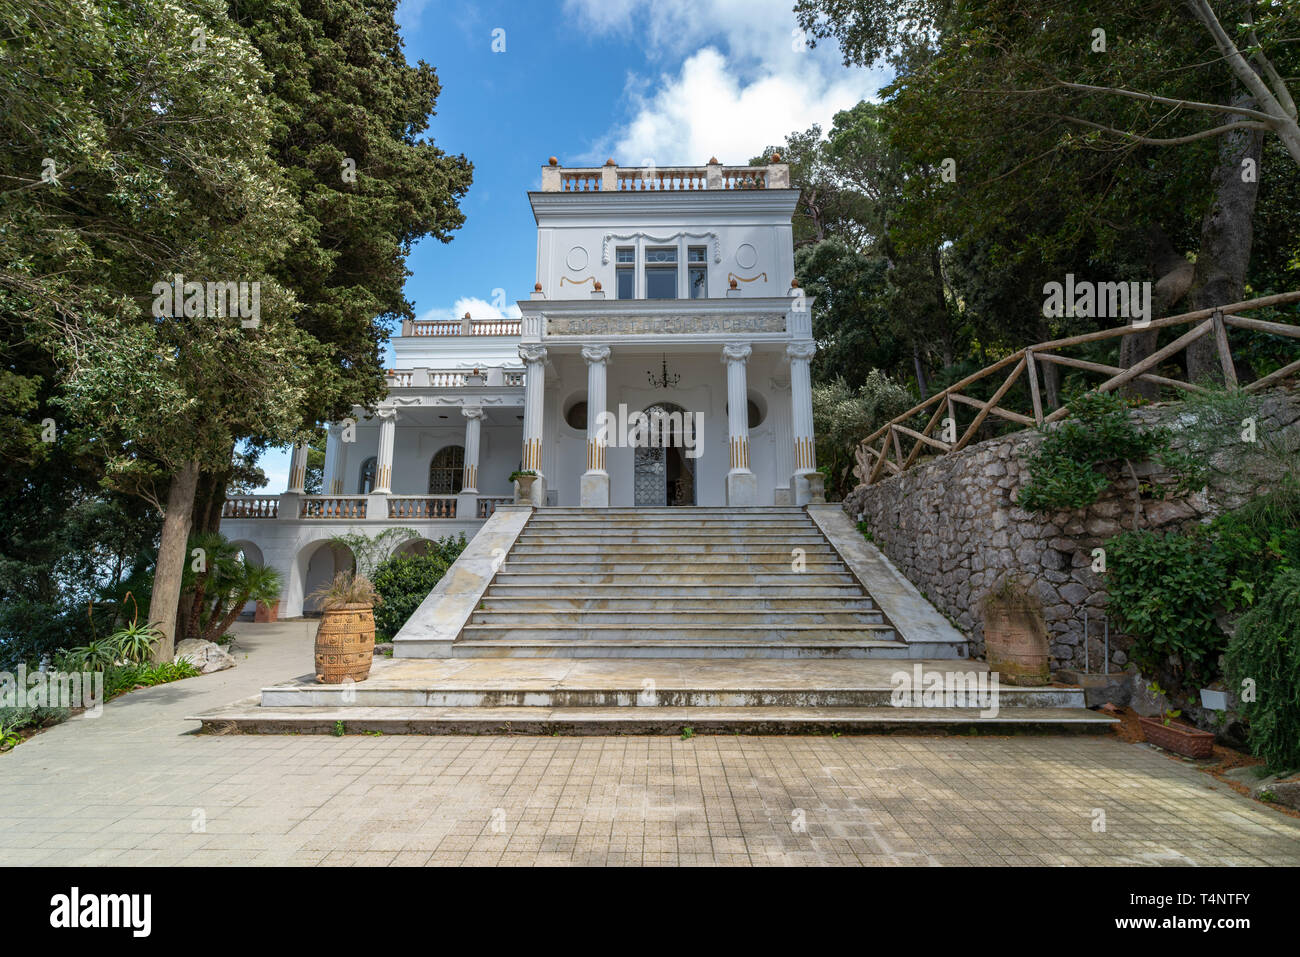 Capri, Villa Lysis, villa Fersen, la Gloriette, liberty villa by edouard chimot on the island of capri dedicated to the youth of love - main entrance Stock Photo